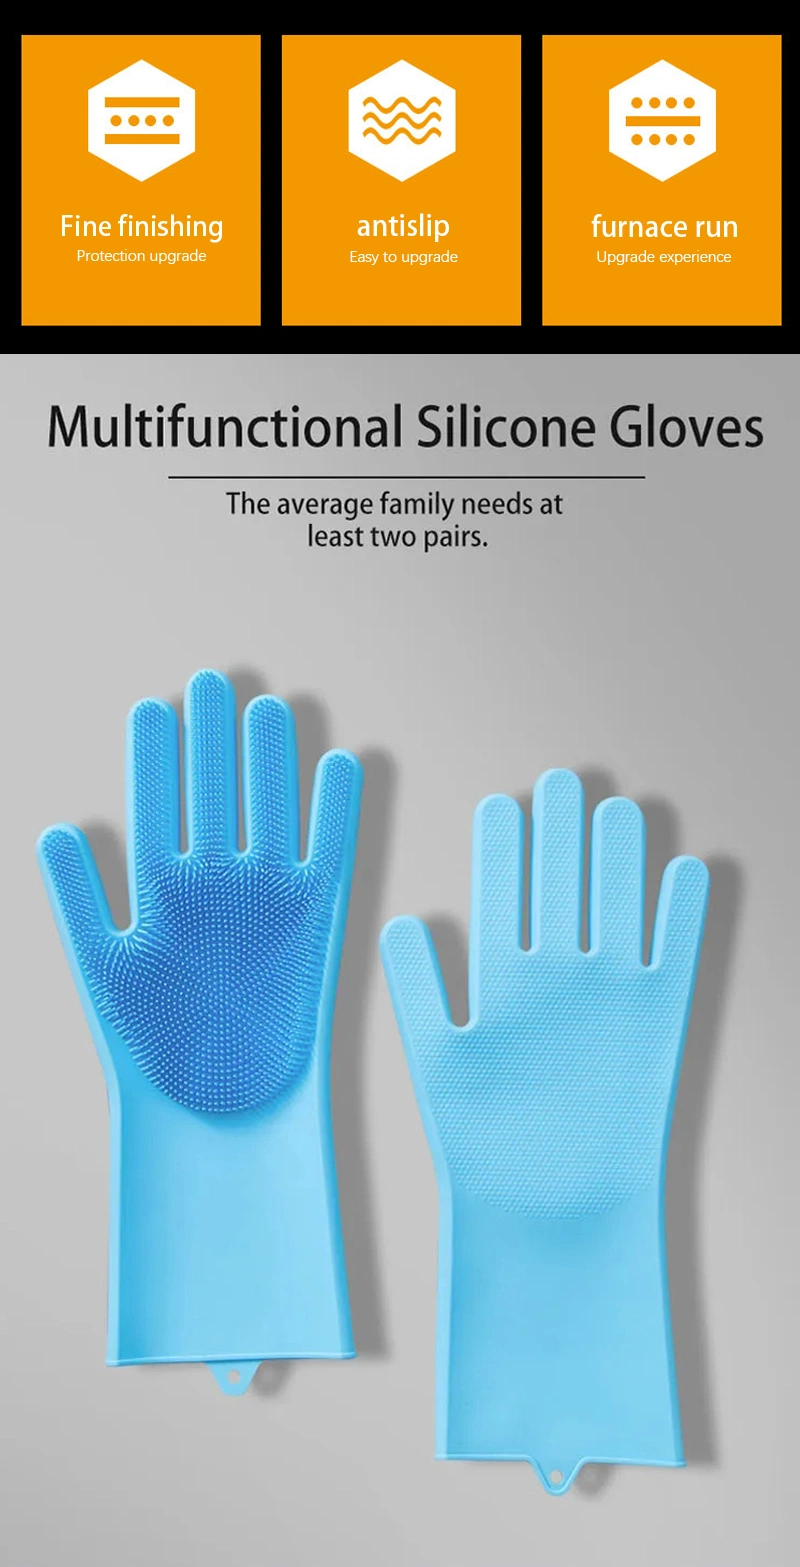 Green Silicone Dishwashing Non-Slip Wear-Resistant Kitchen Magic Brush Household Gloves